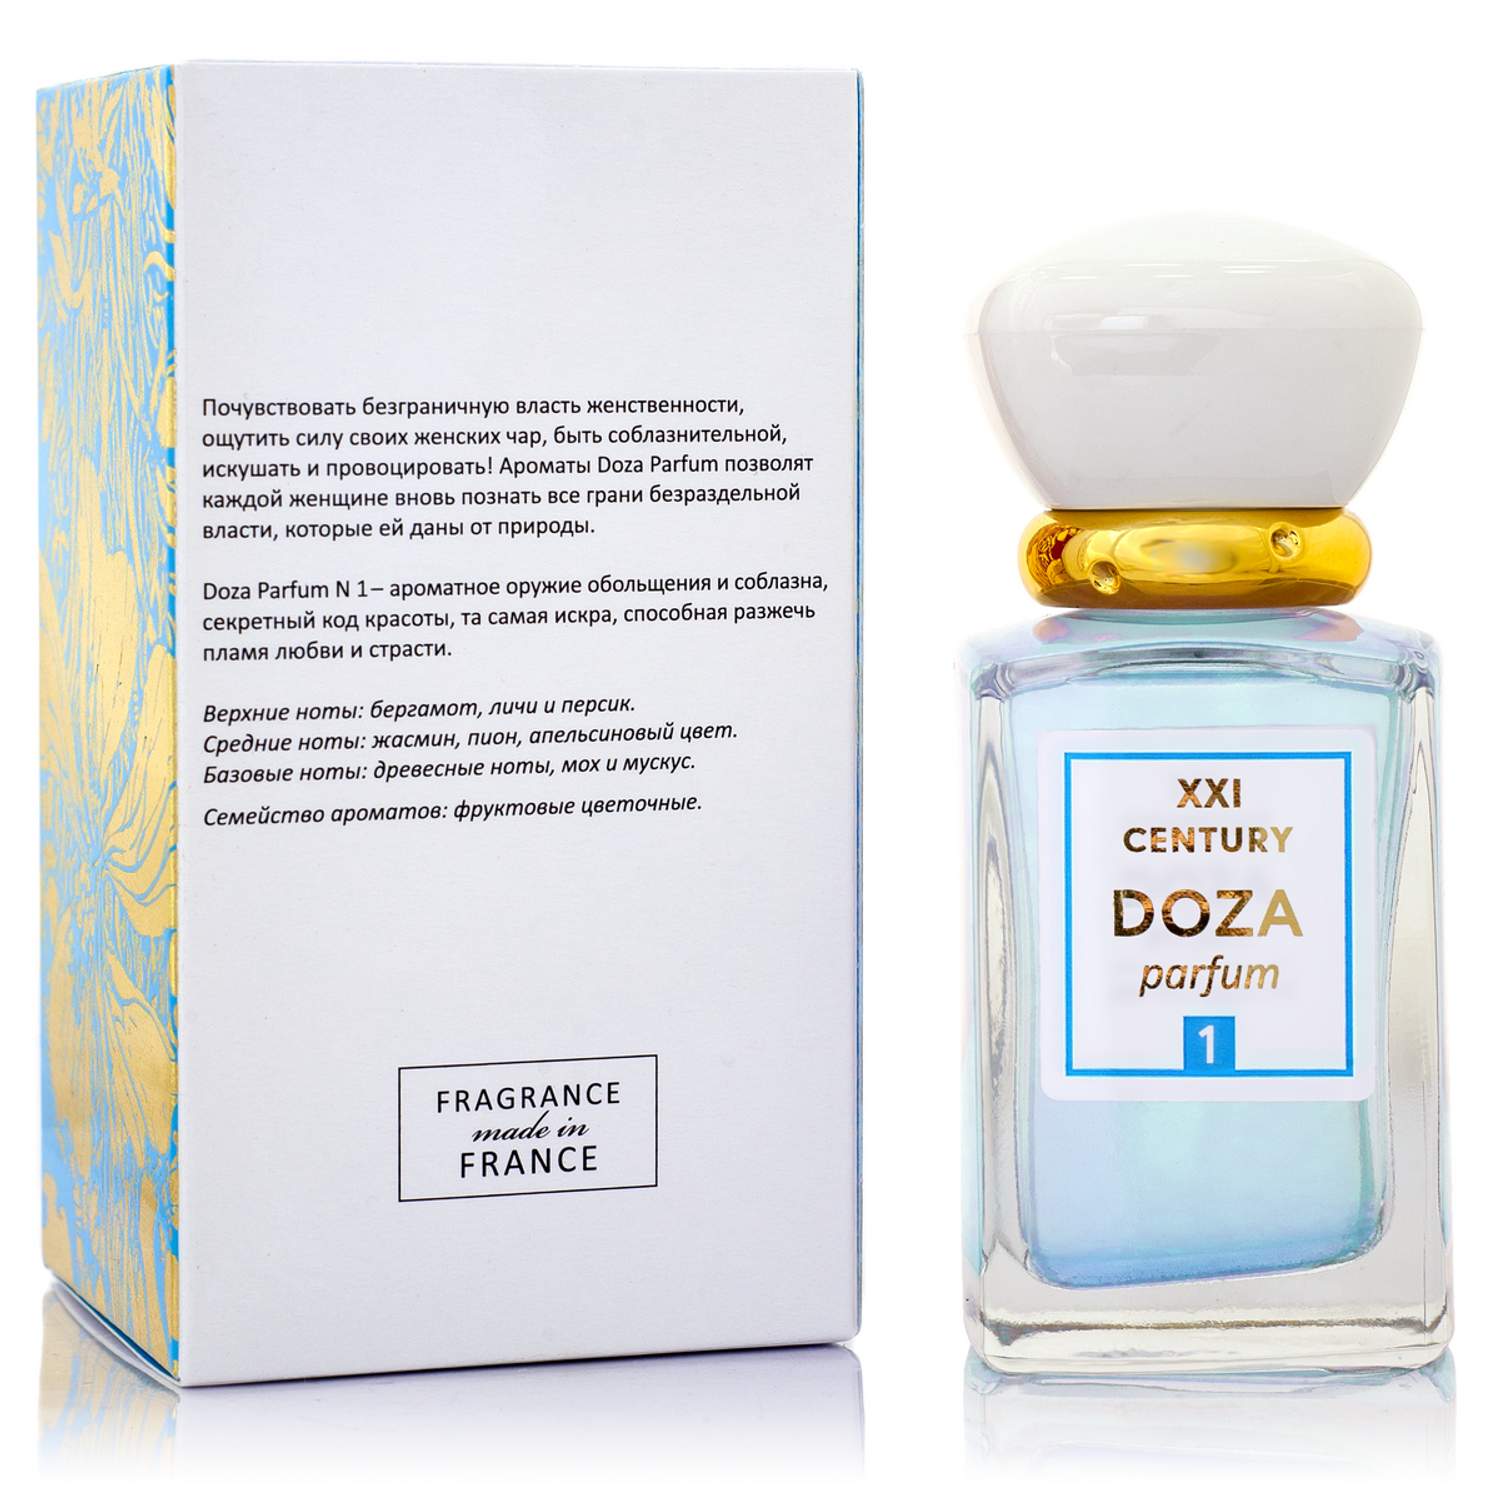 Духи XXI CENTURY DOZA parfum №1 50 мл - фото 3